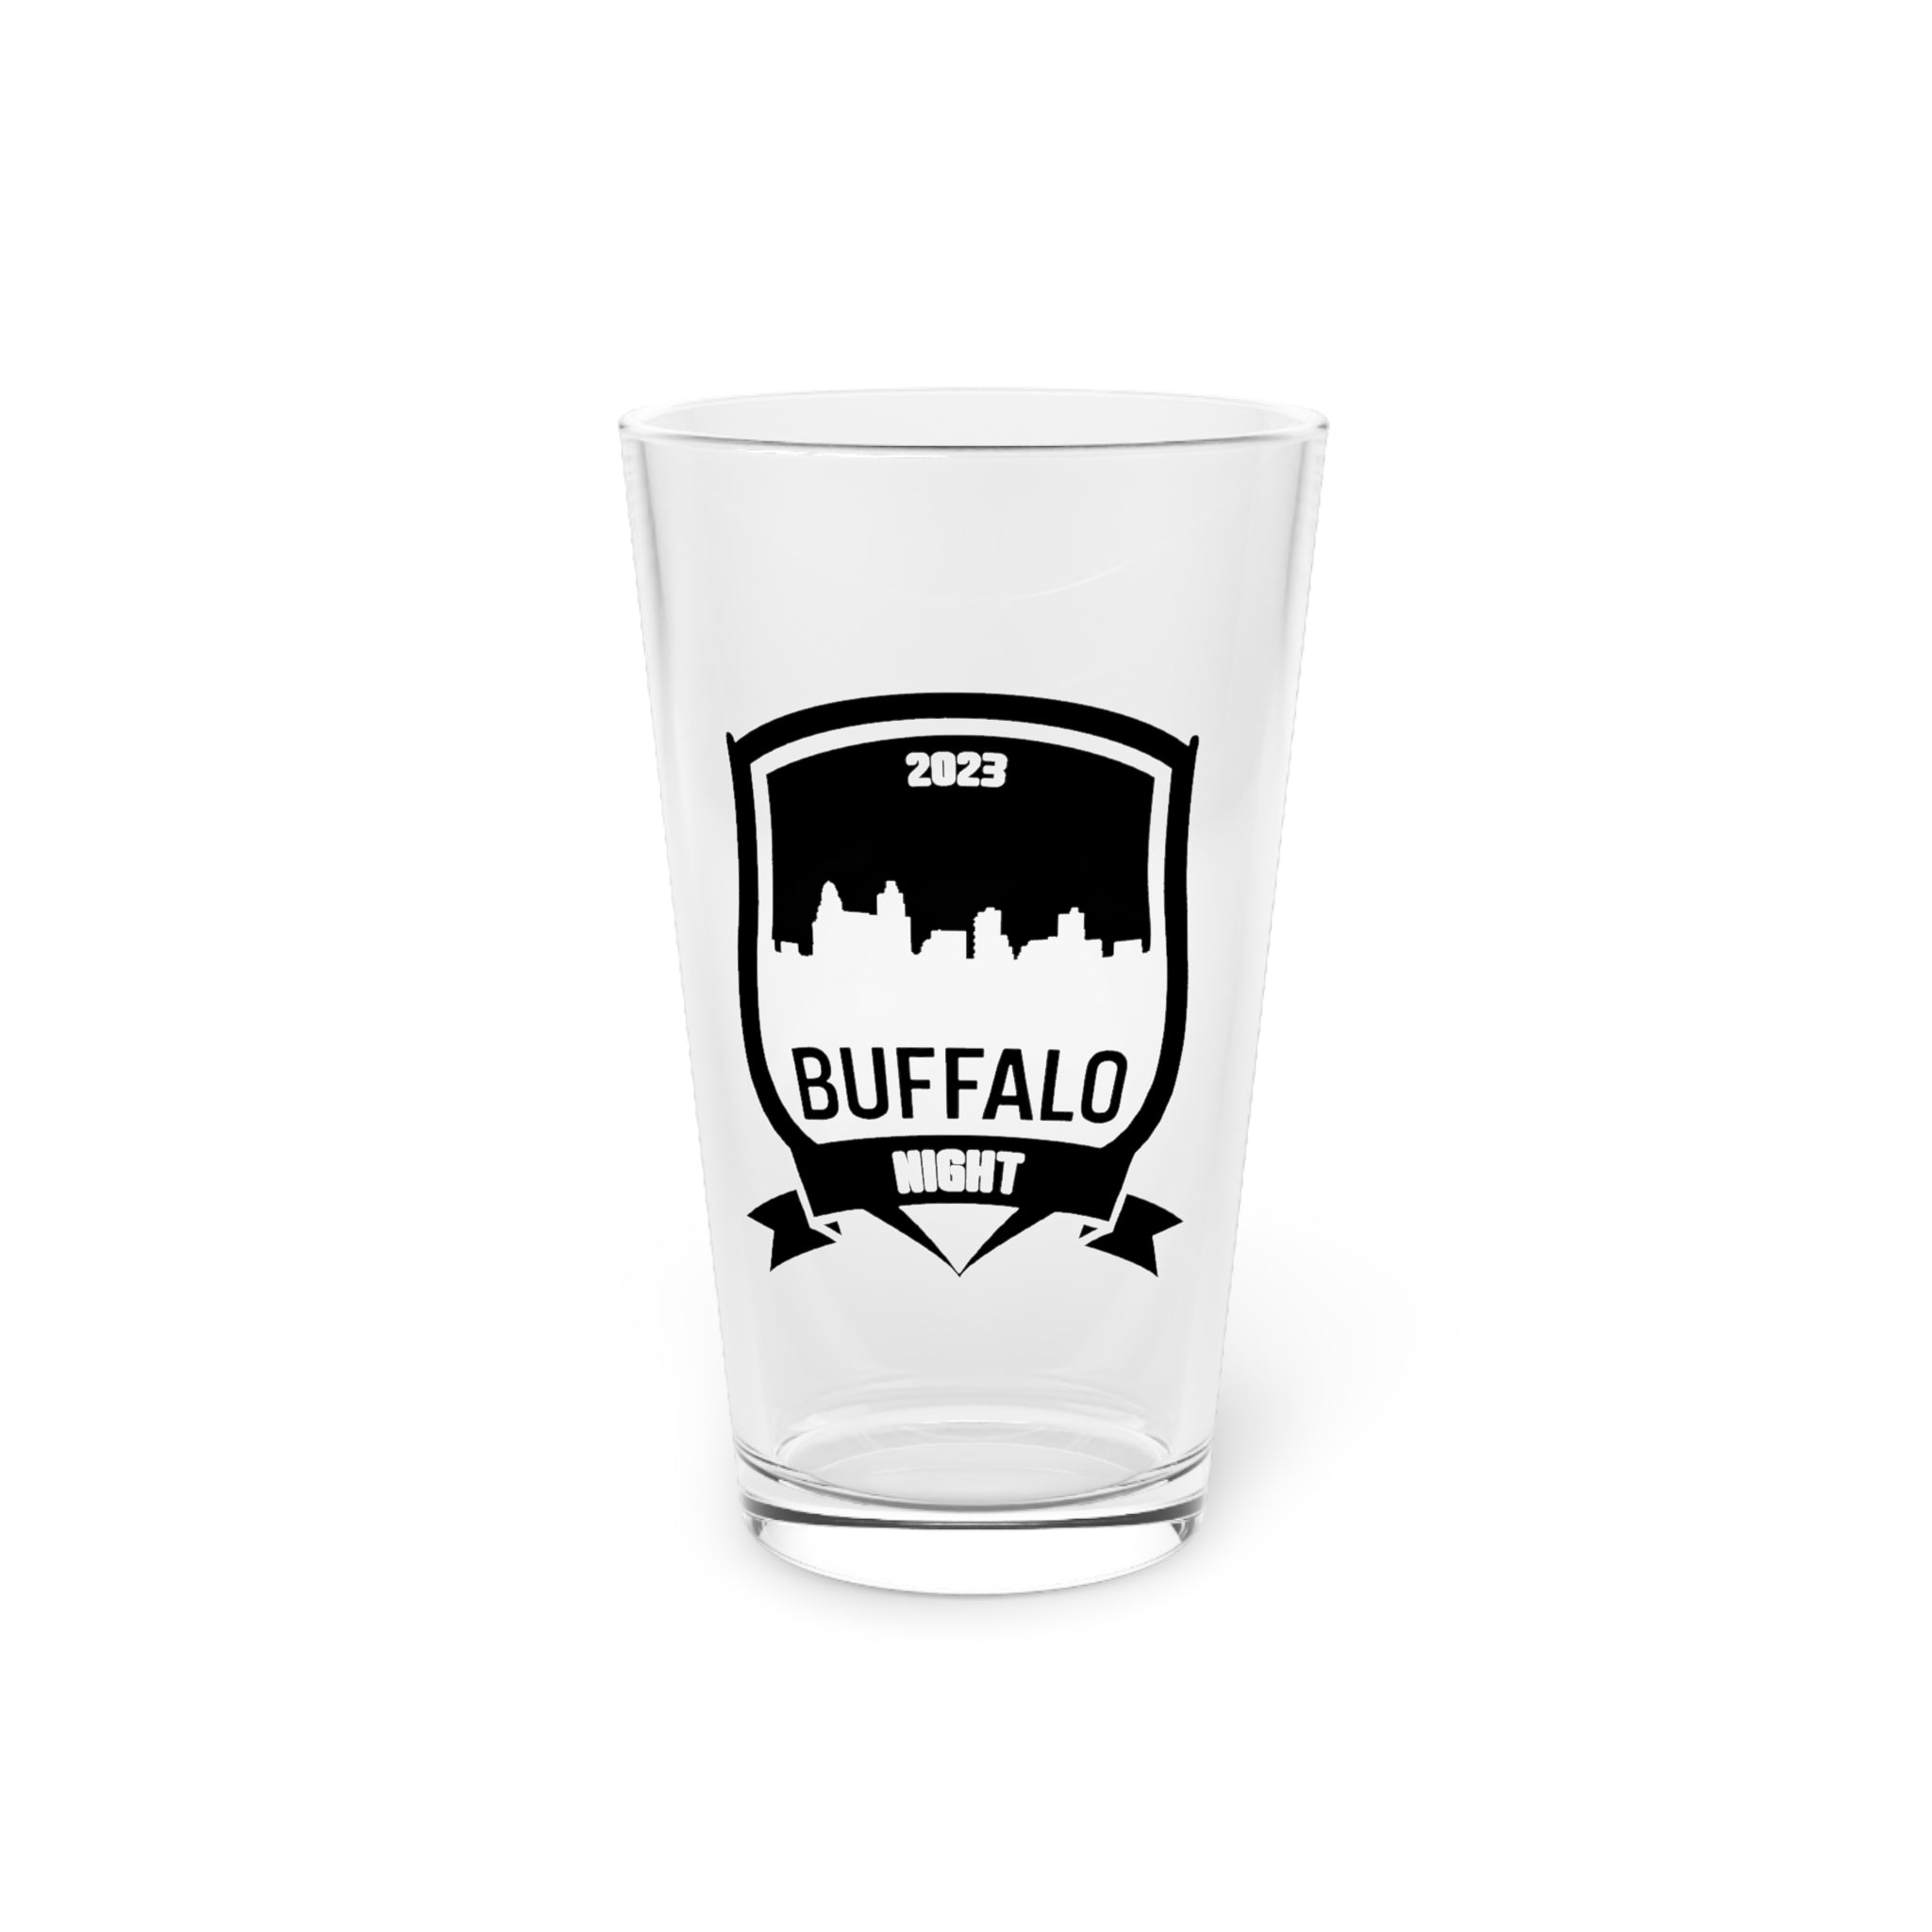 Buffalo Night Black Pint Glass, 16oz